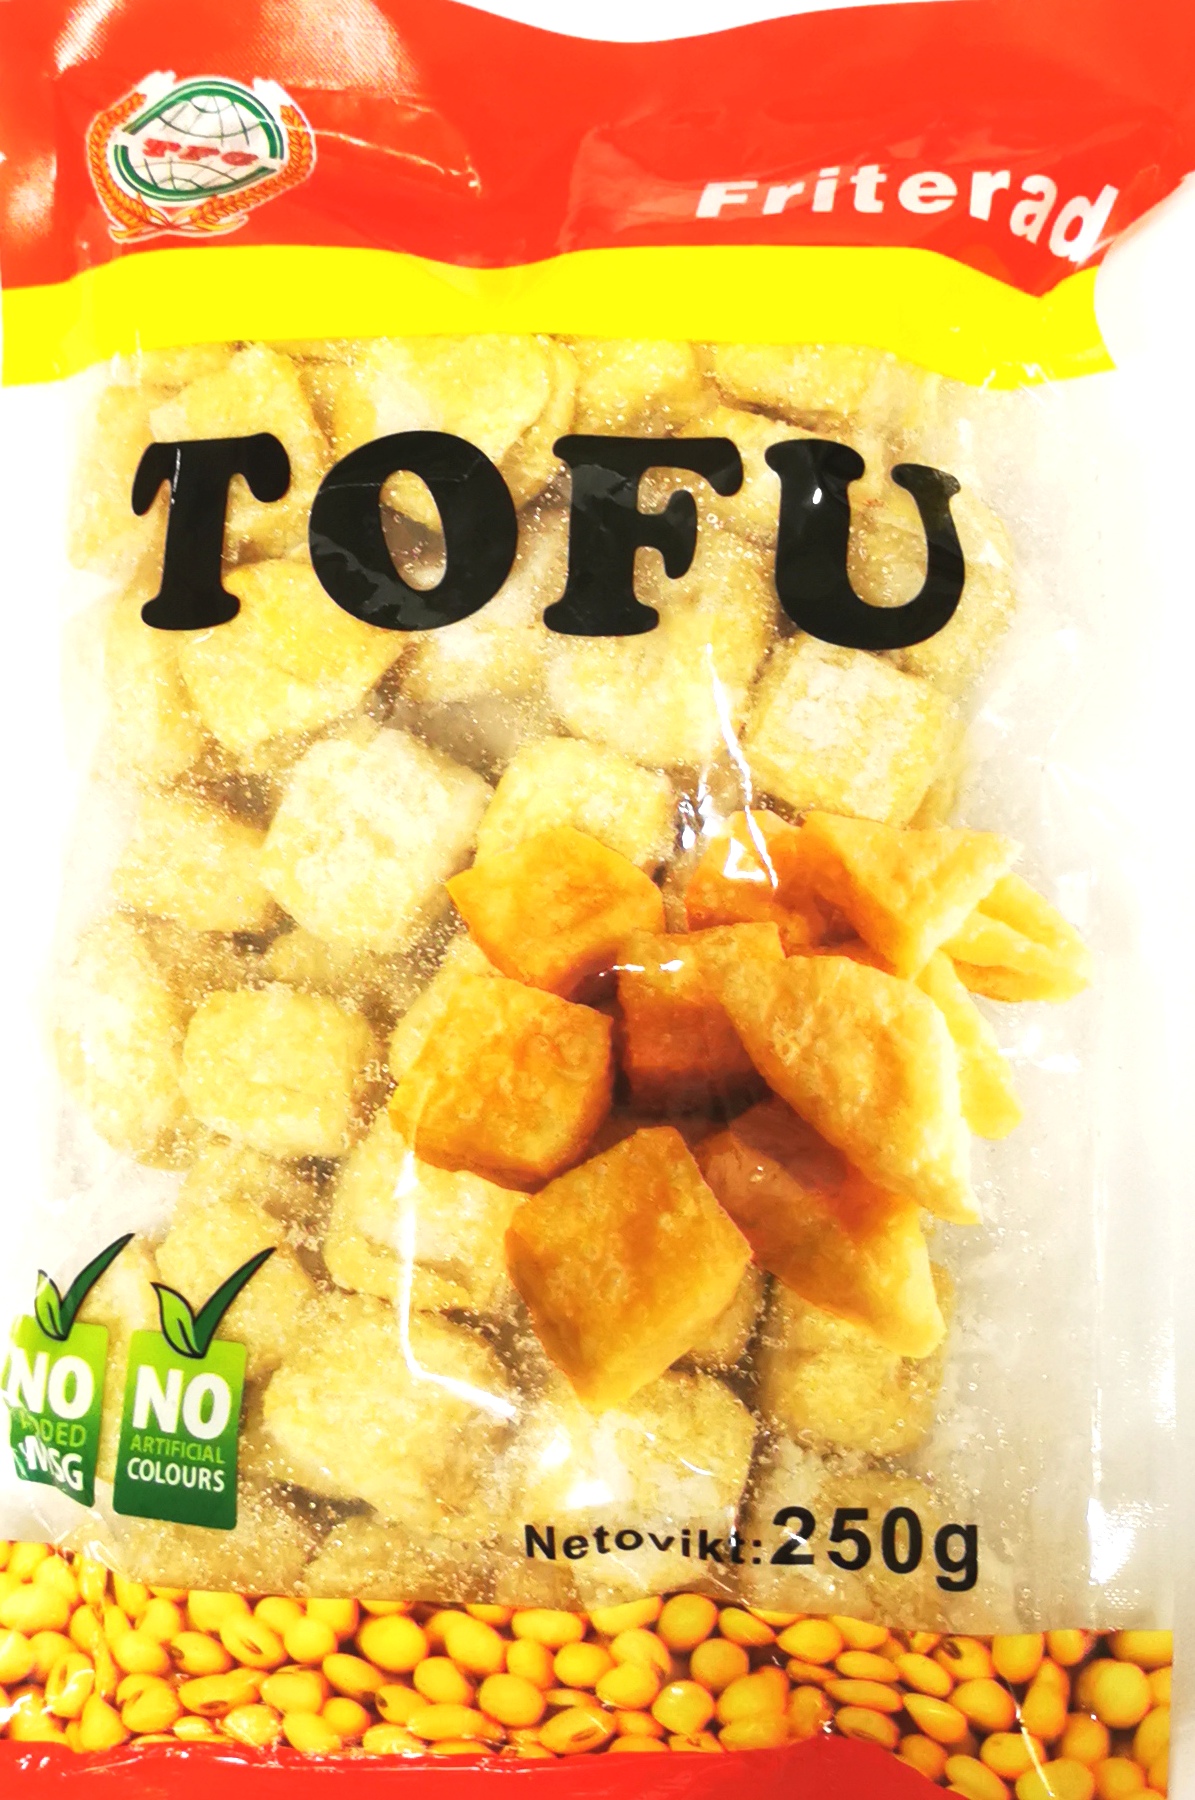 TFC Friterad Tofu 250g